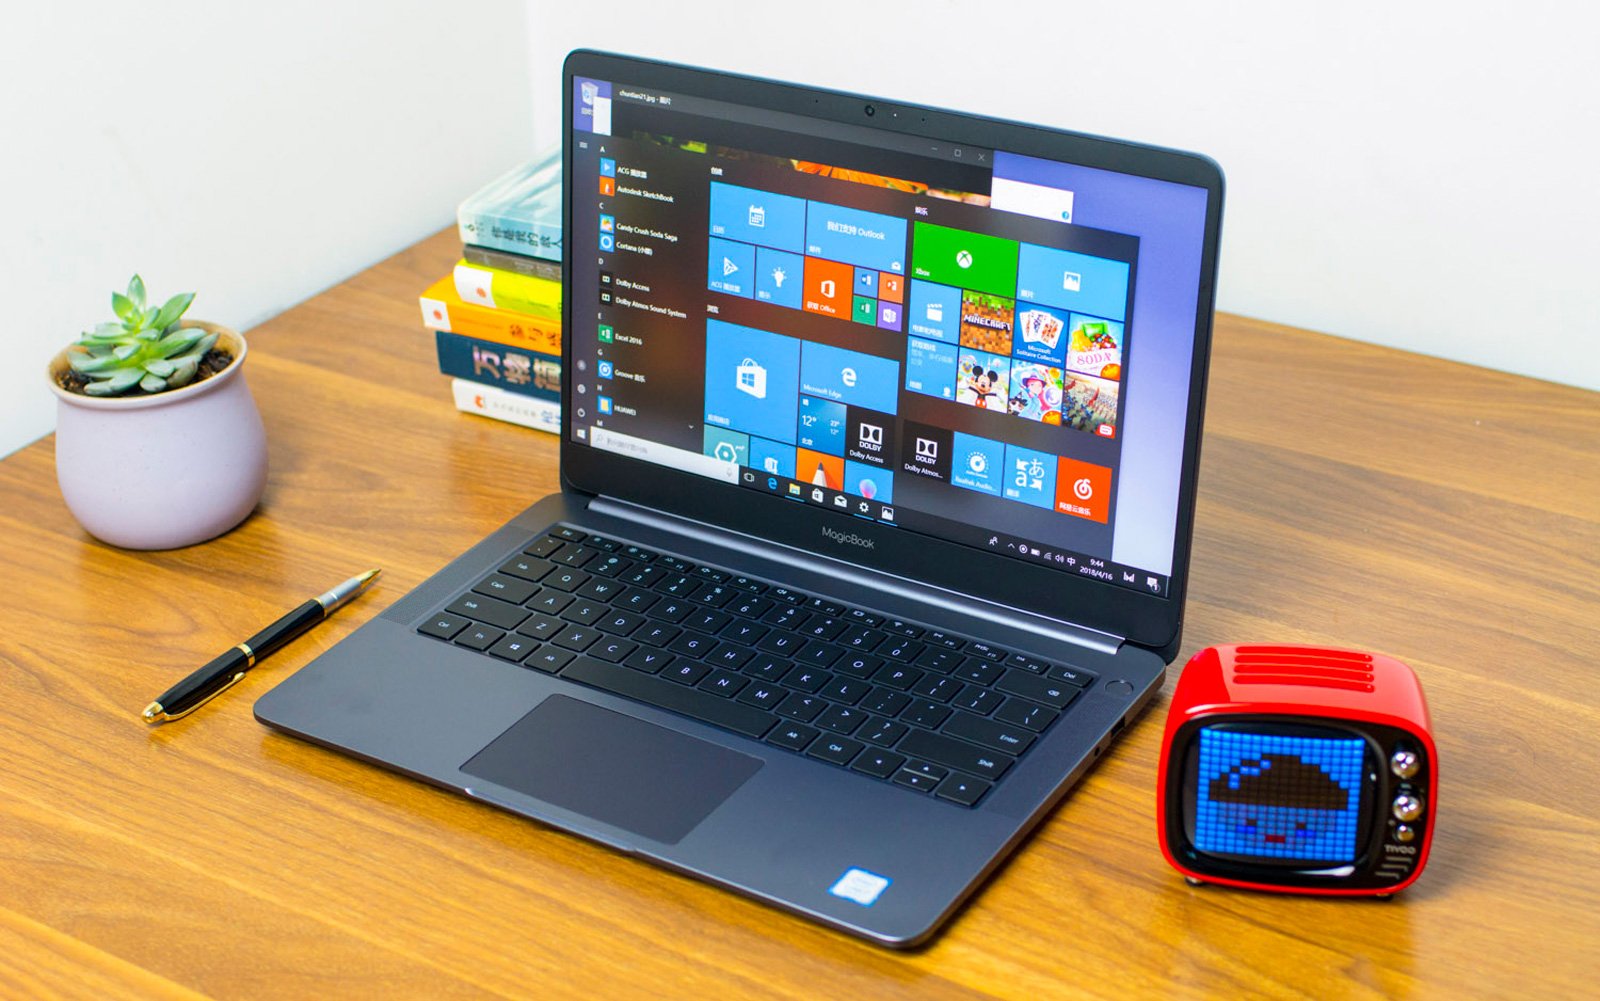 Huawei announces Honor MagicBook Windows 10 laptop